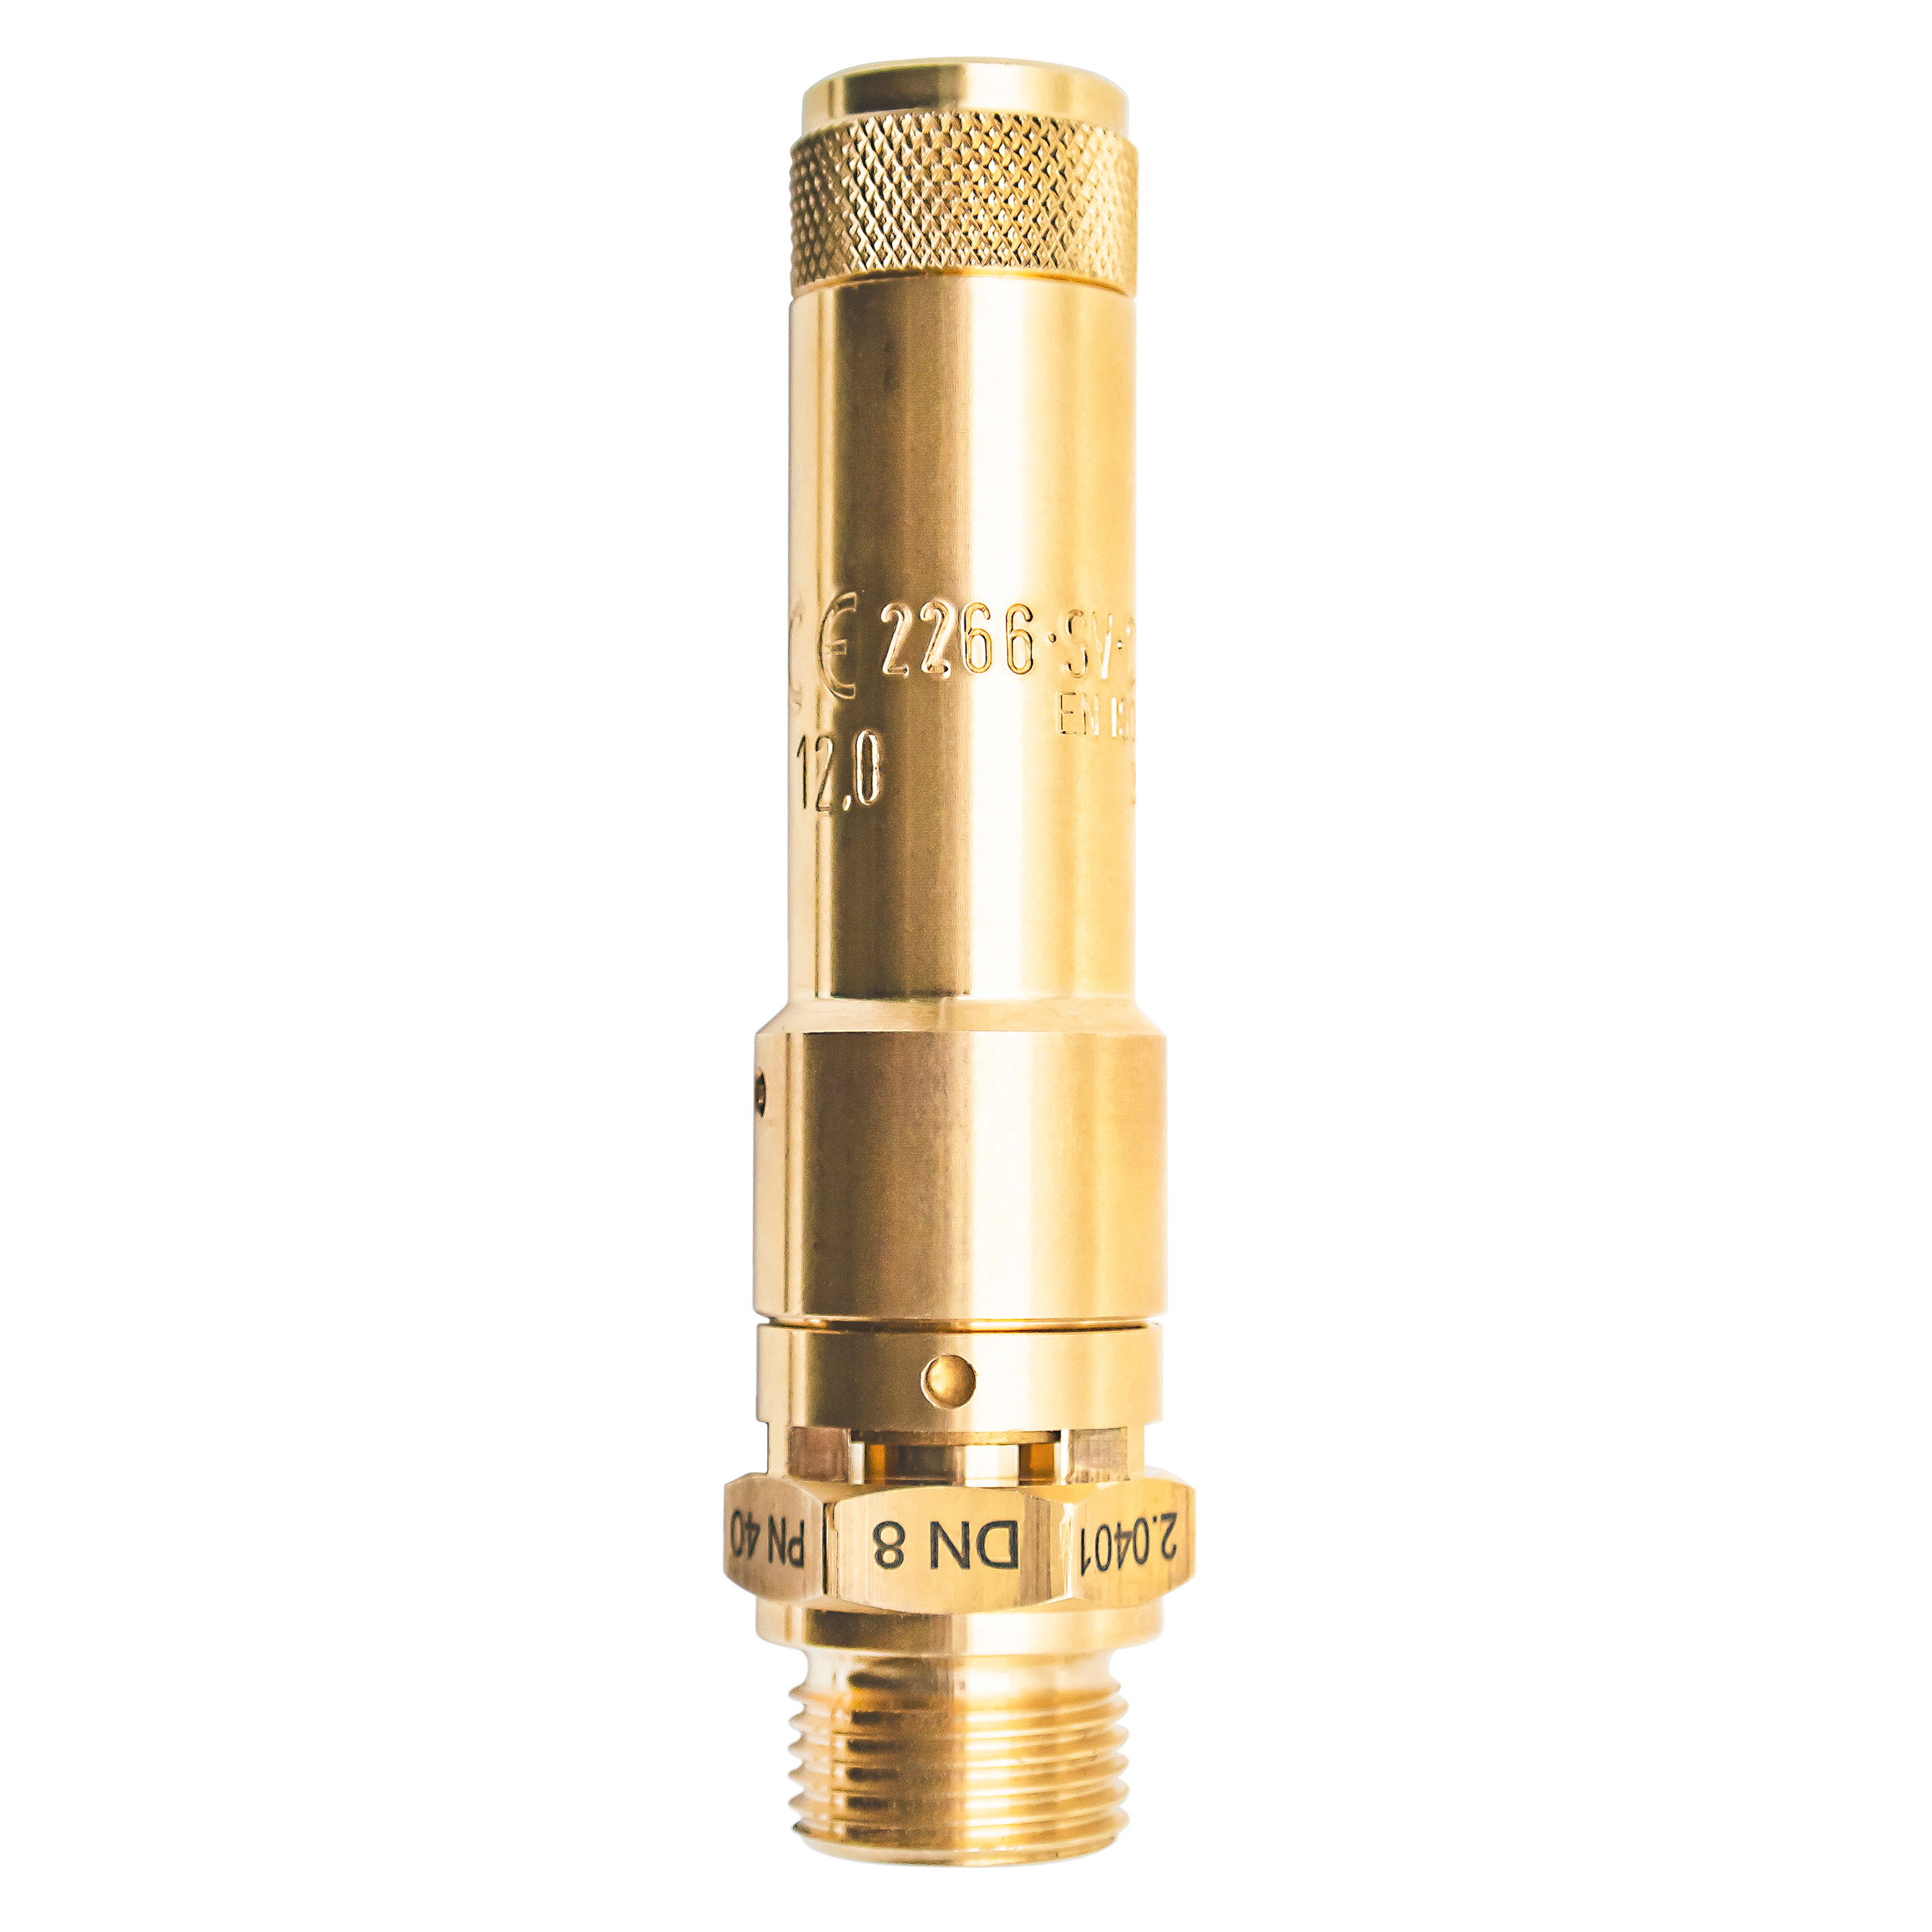 Savety valve component tested DN 8, G⅜, set pressure: 14.7 bar (213,15 psi)